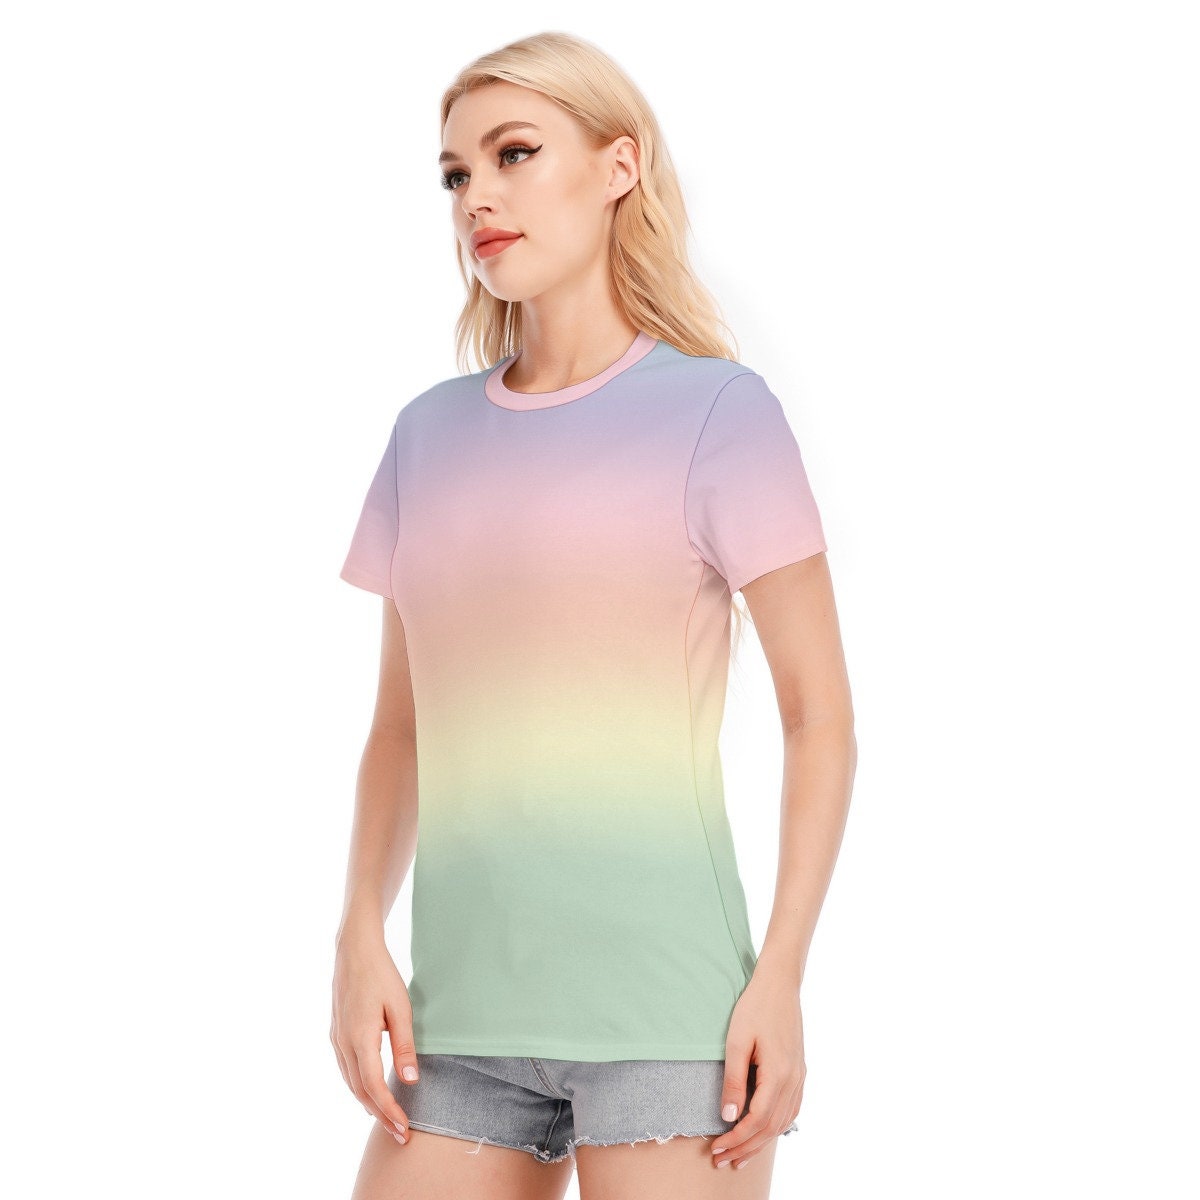 Ombre-Top, Regenbogen-Tops, Ombre-T-Shirt, Regenbogen-T-Shirt, Damen-T-Shirts, einzigartiges T-Shirt, Ombre-T-Shirt, abstraktes T-Shirt, künstlerisches T-Shirt